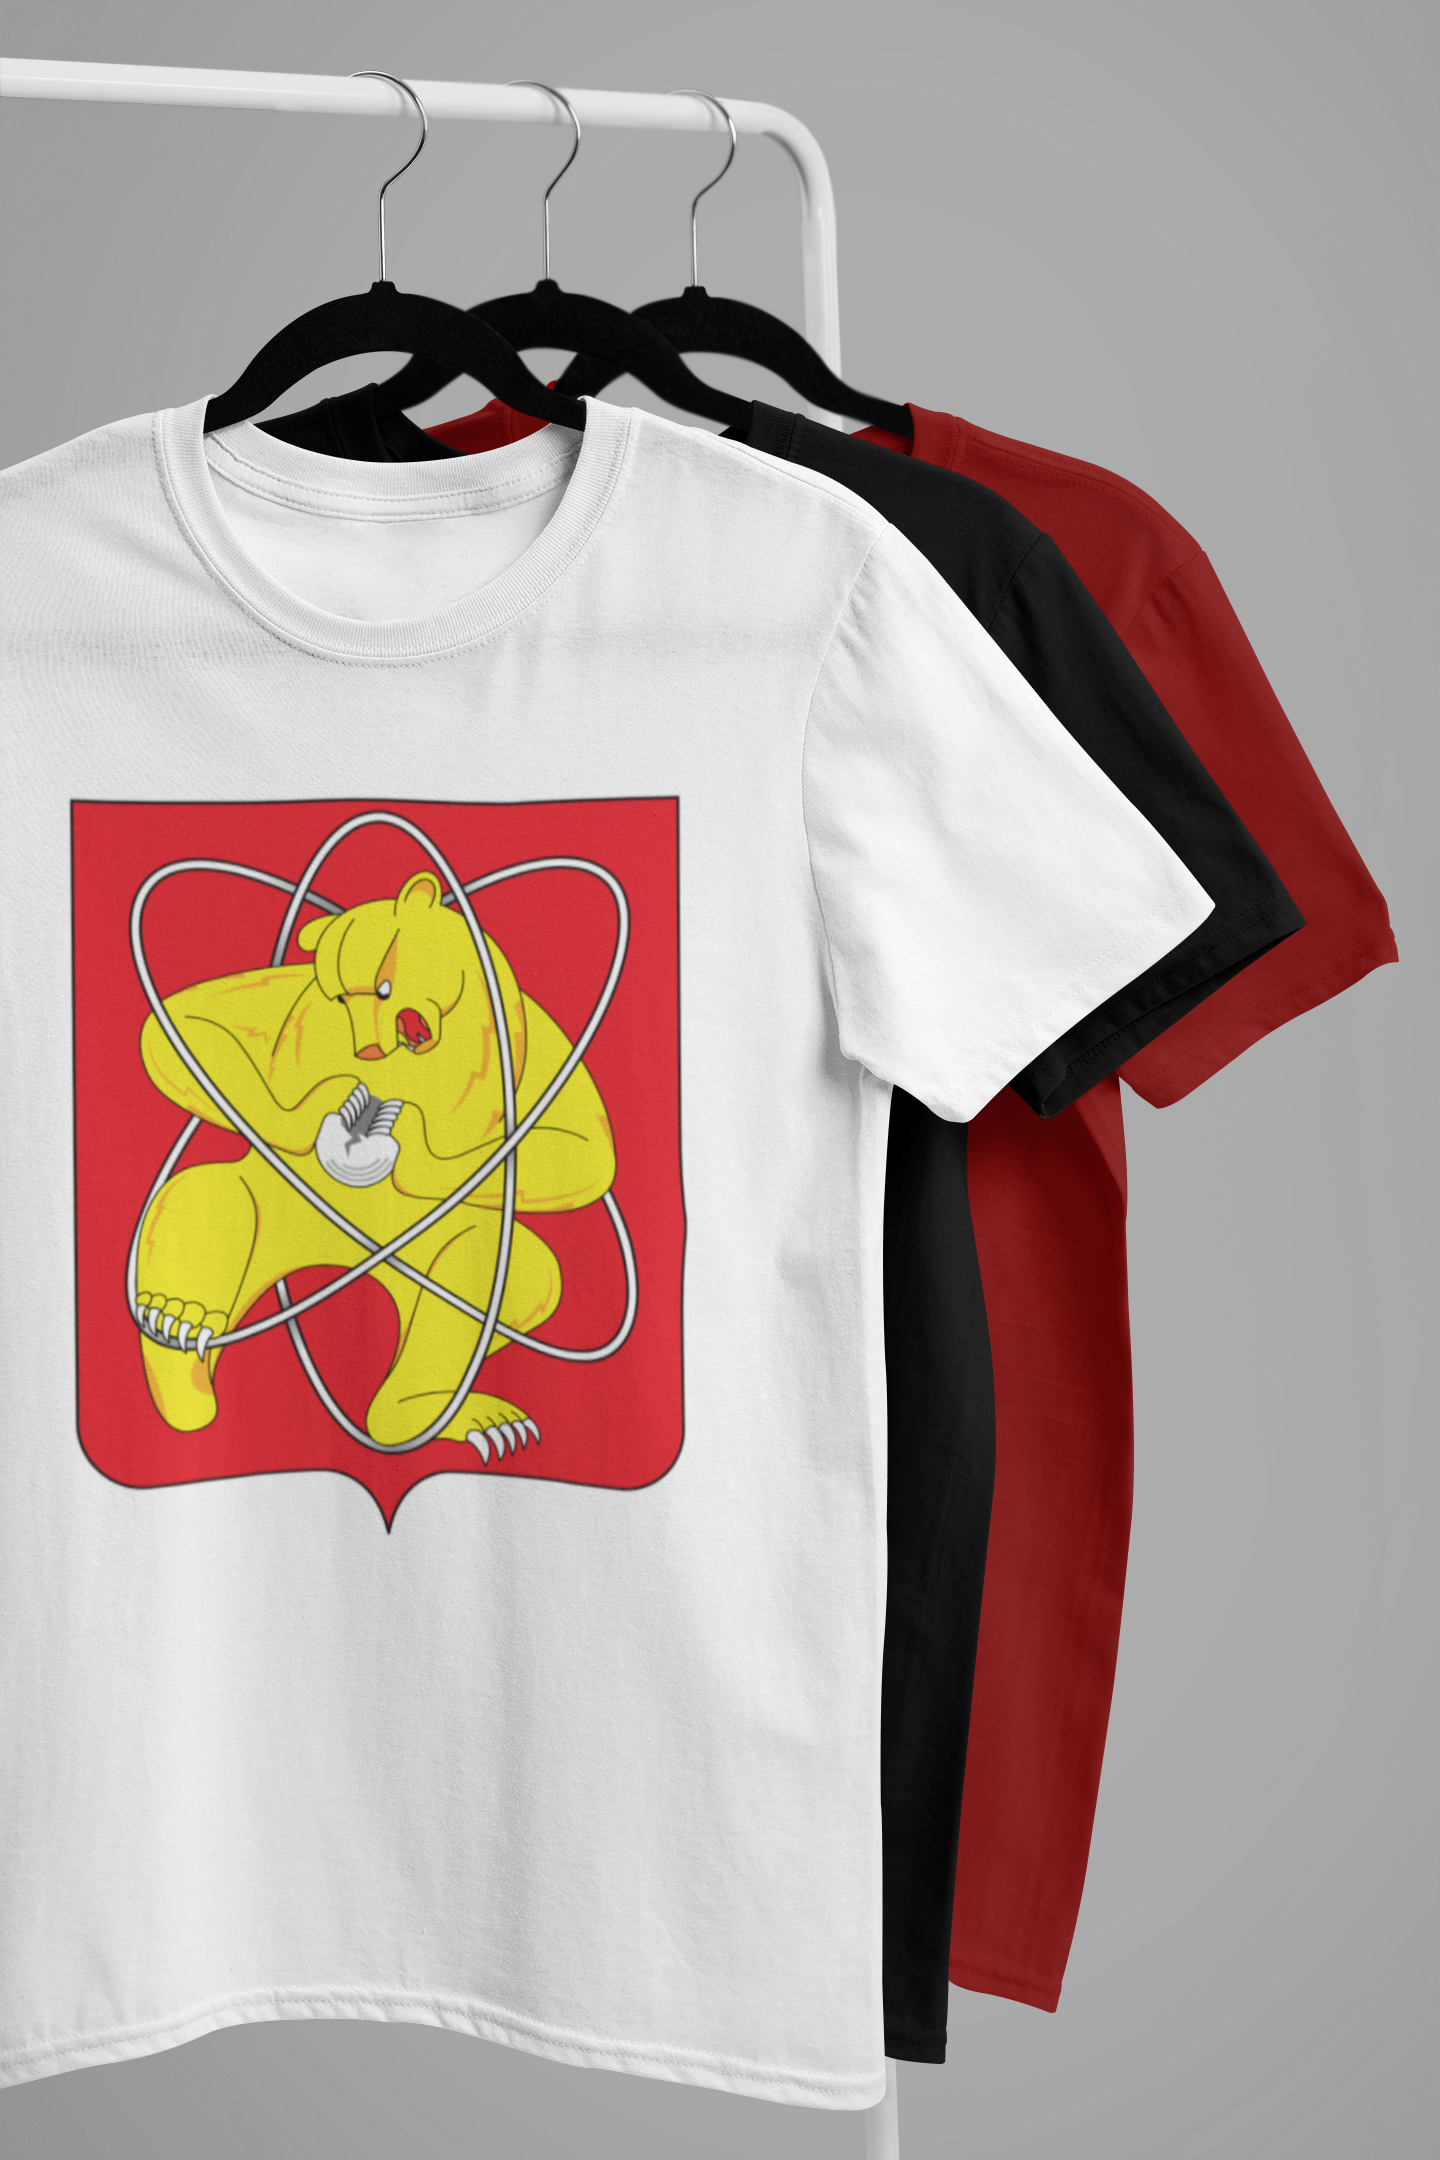 Nuclear Bear Shirt